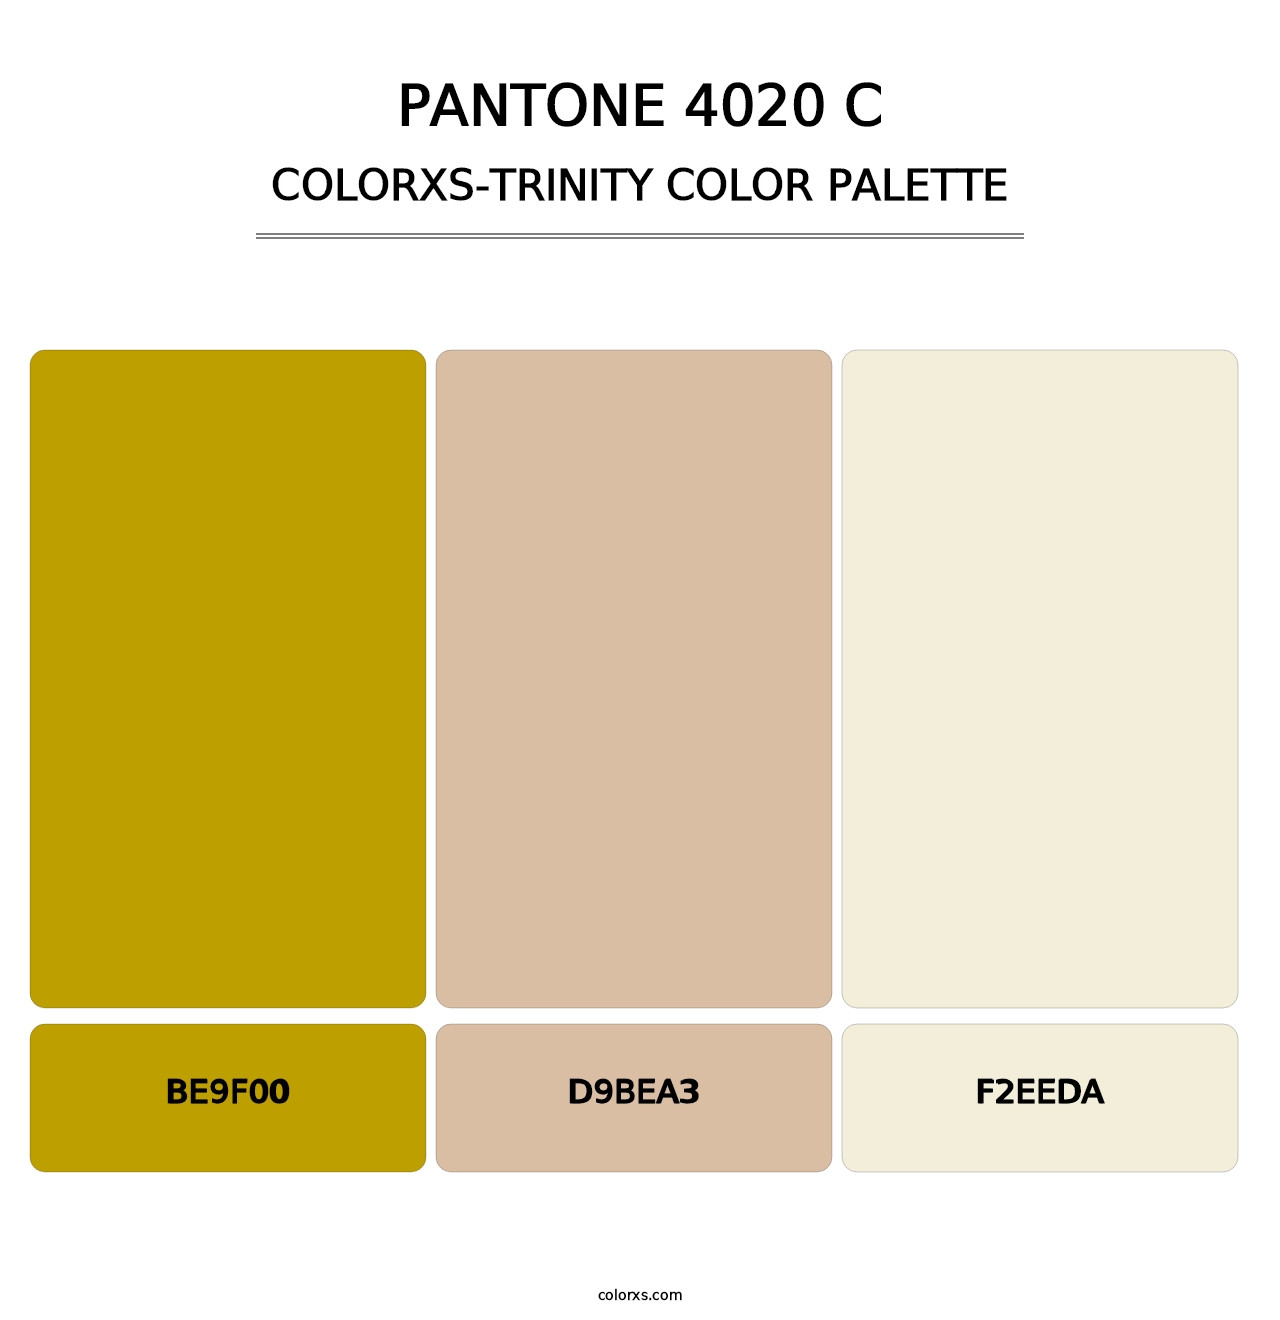 PANTONE 4020 C - Colorxs Trinity Palette